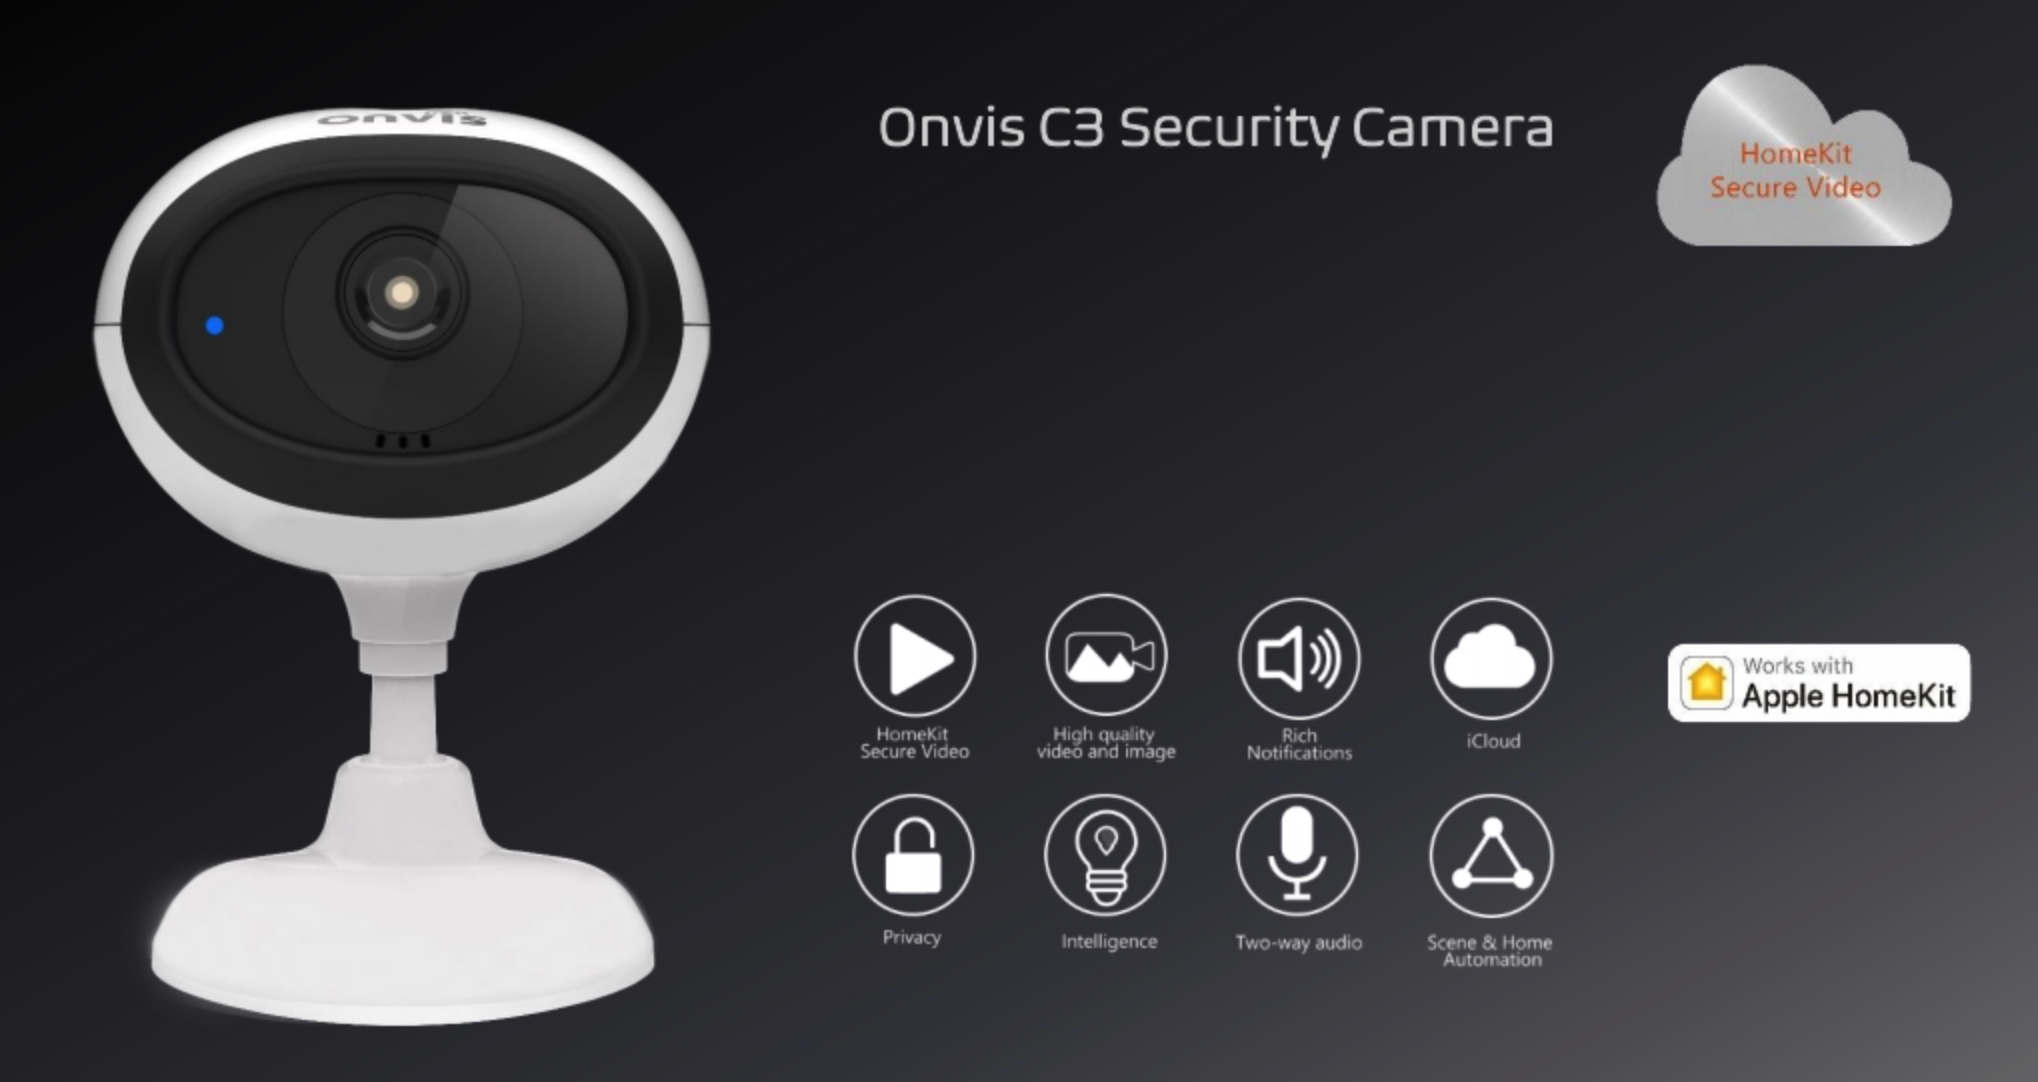 Onvis C3 Security Camera Features